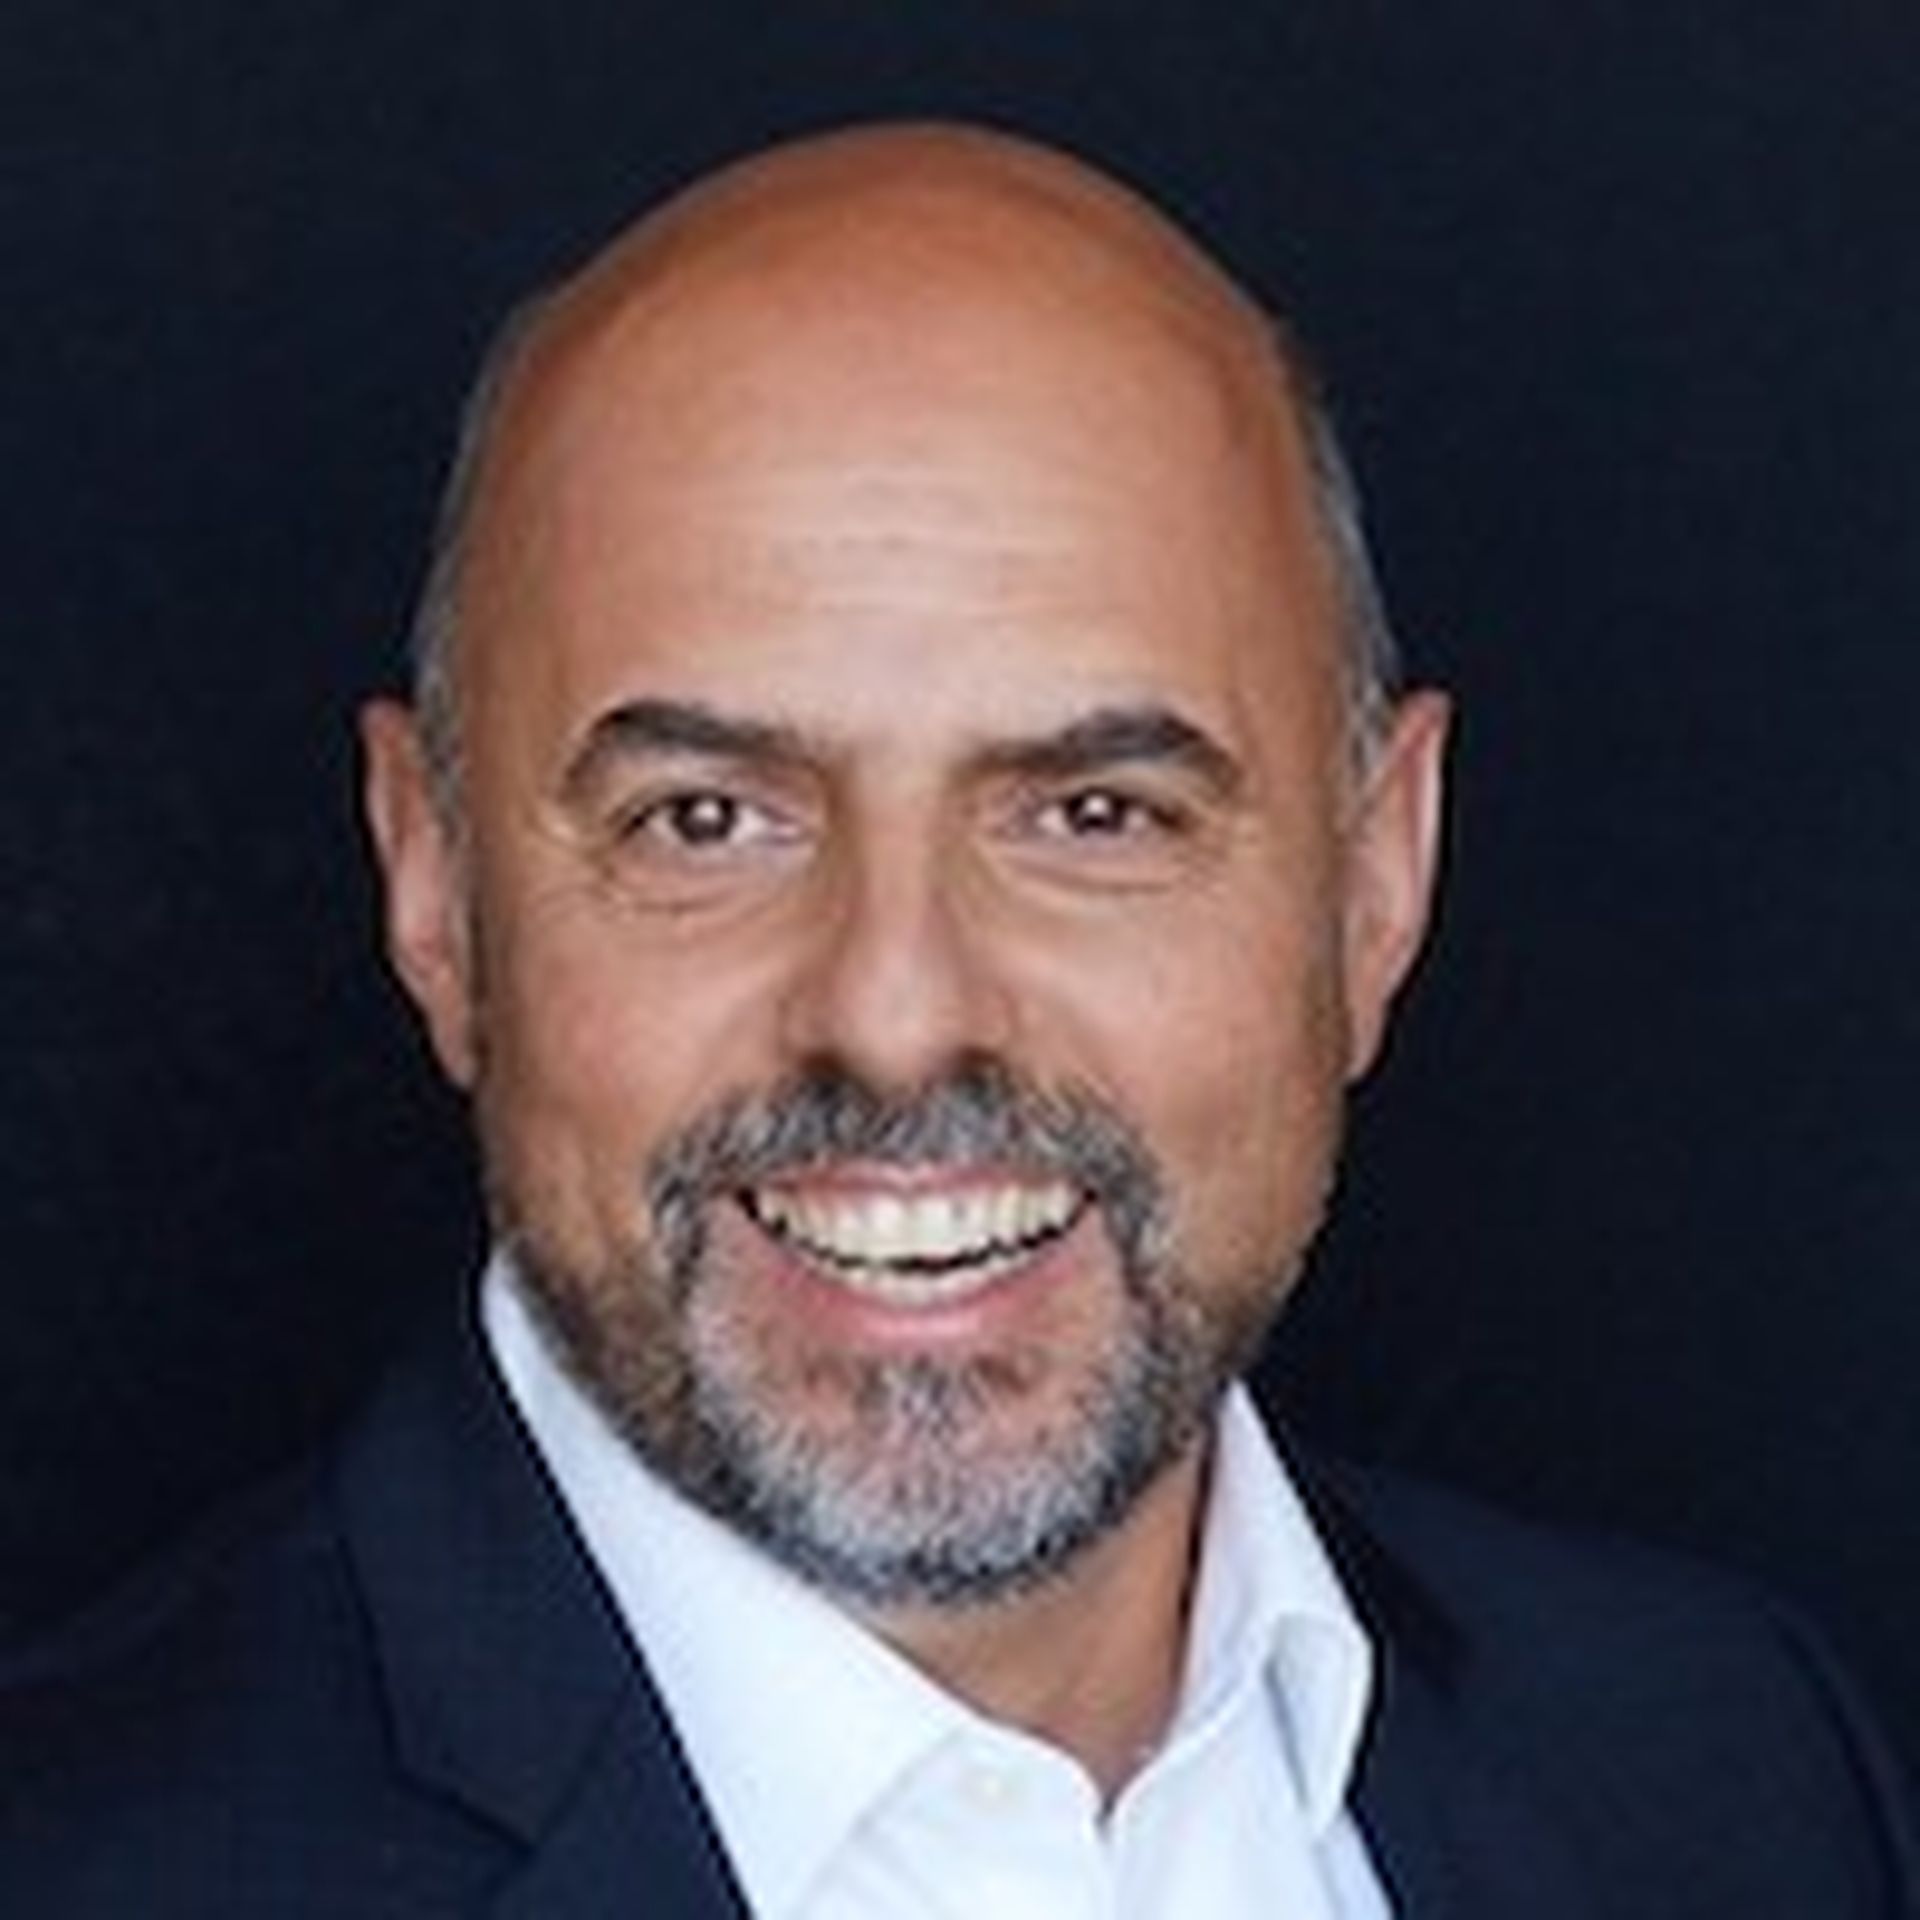 Marc Koehn, CEO